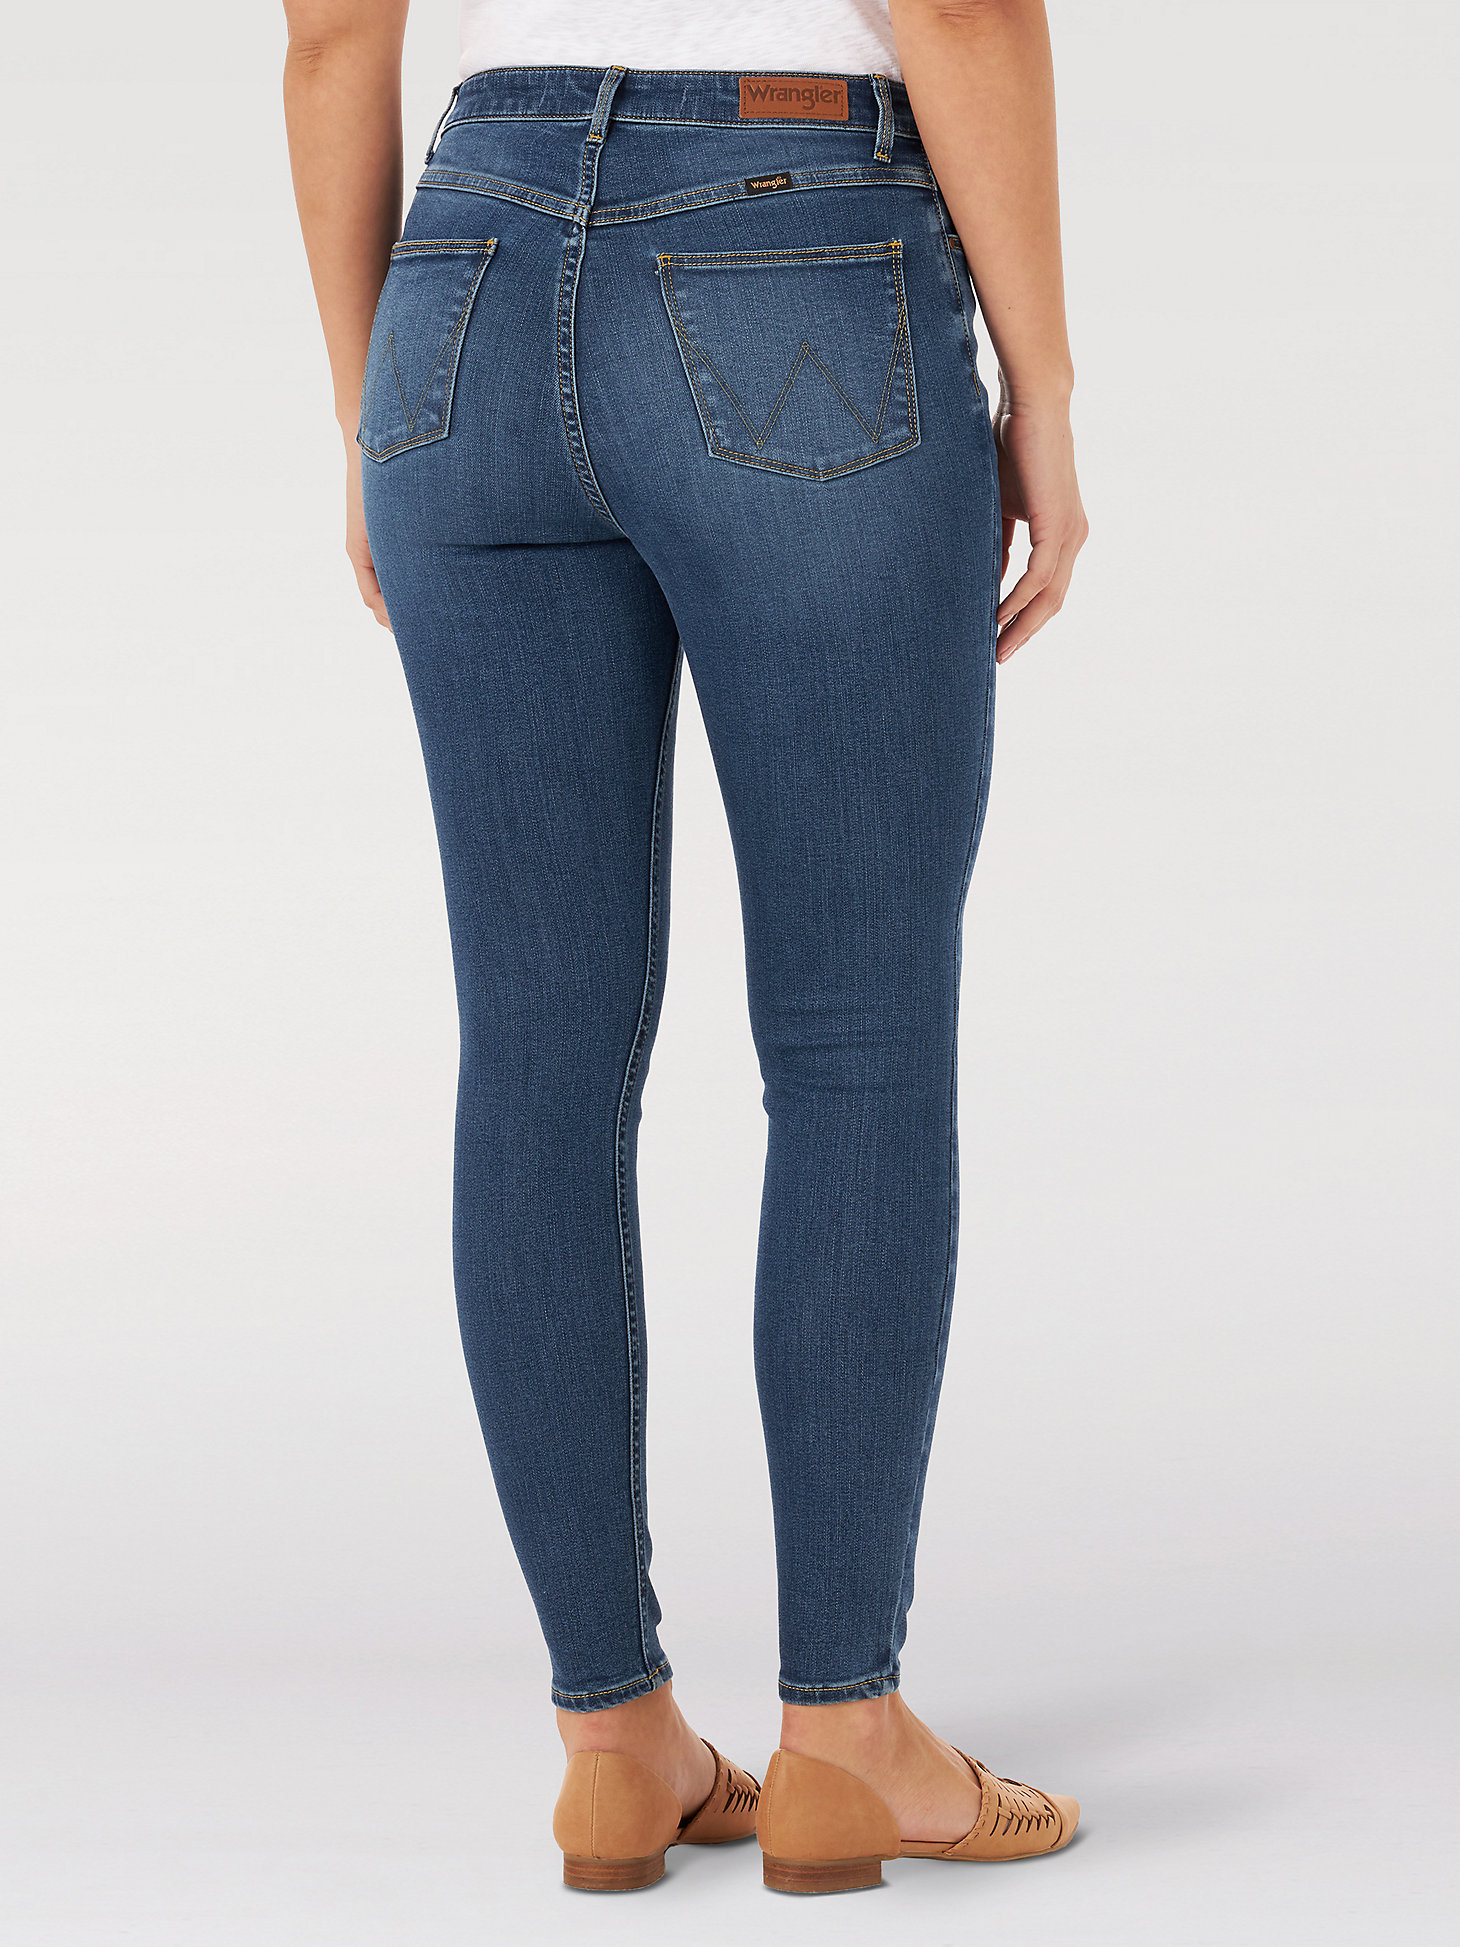 Women's Wrangler® High Rise Unforgettable Skinny Jean in Marina alternative view 1